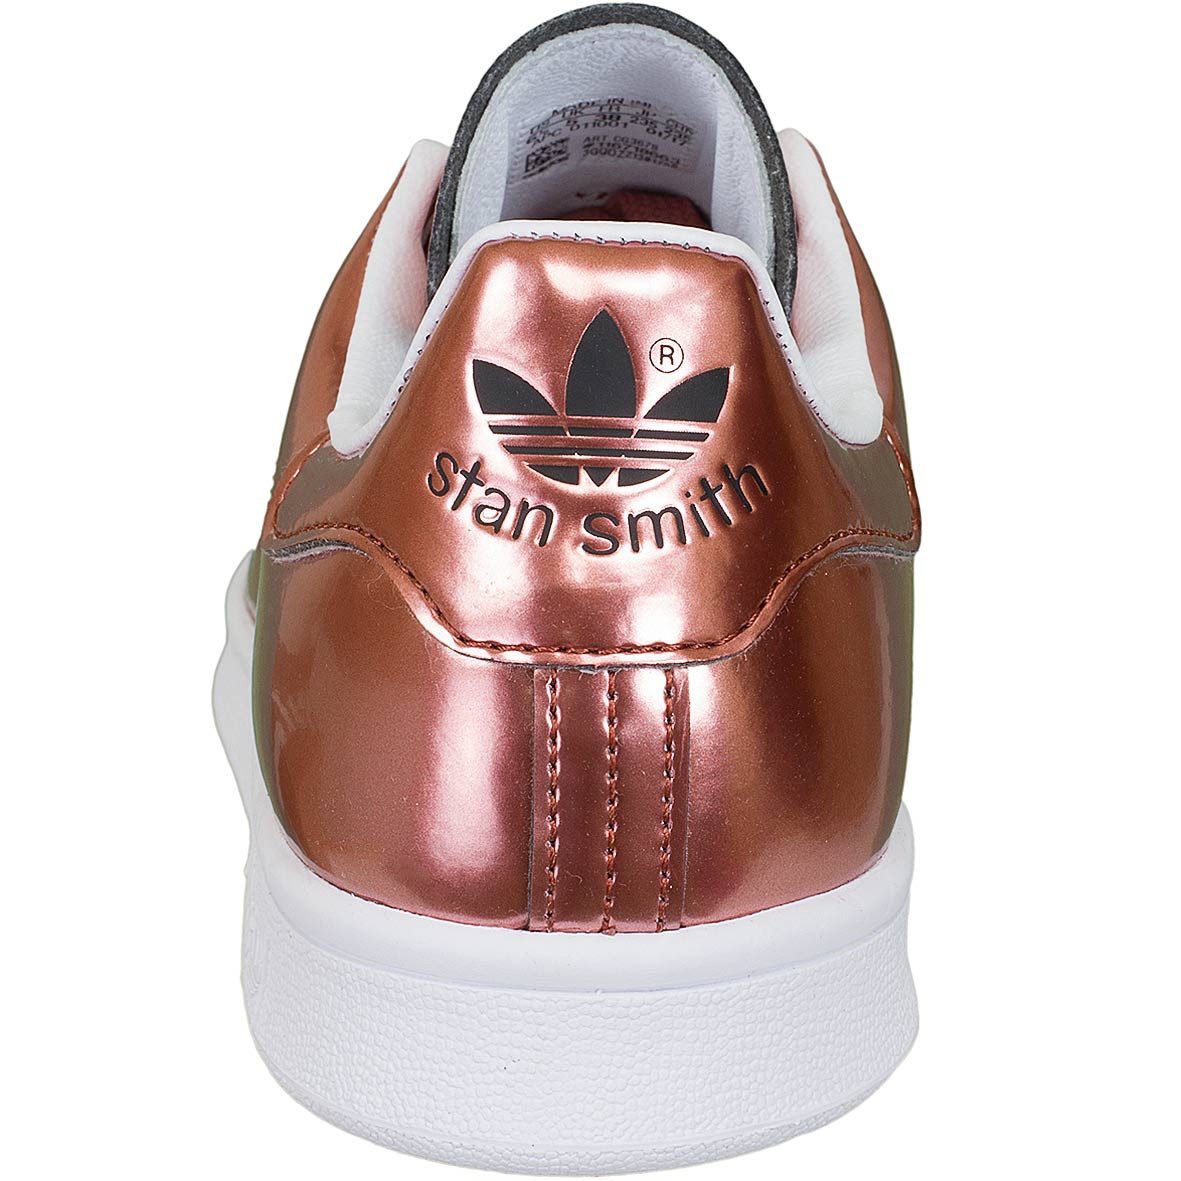 ☆ Adidas Originals Damen Sneaker Stan Smith kupfer - hier bestellen!